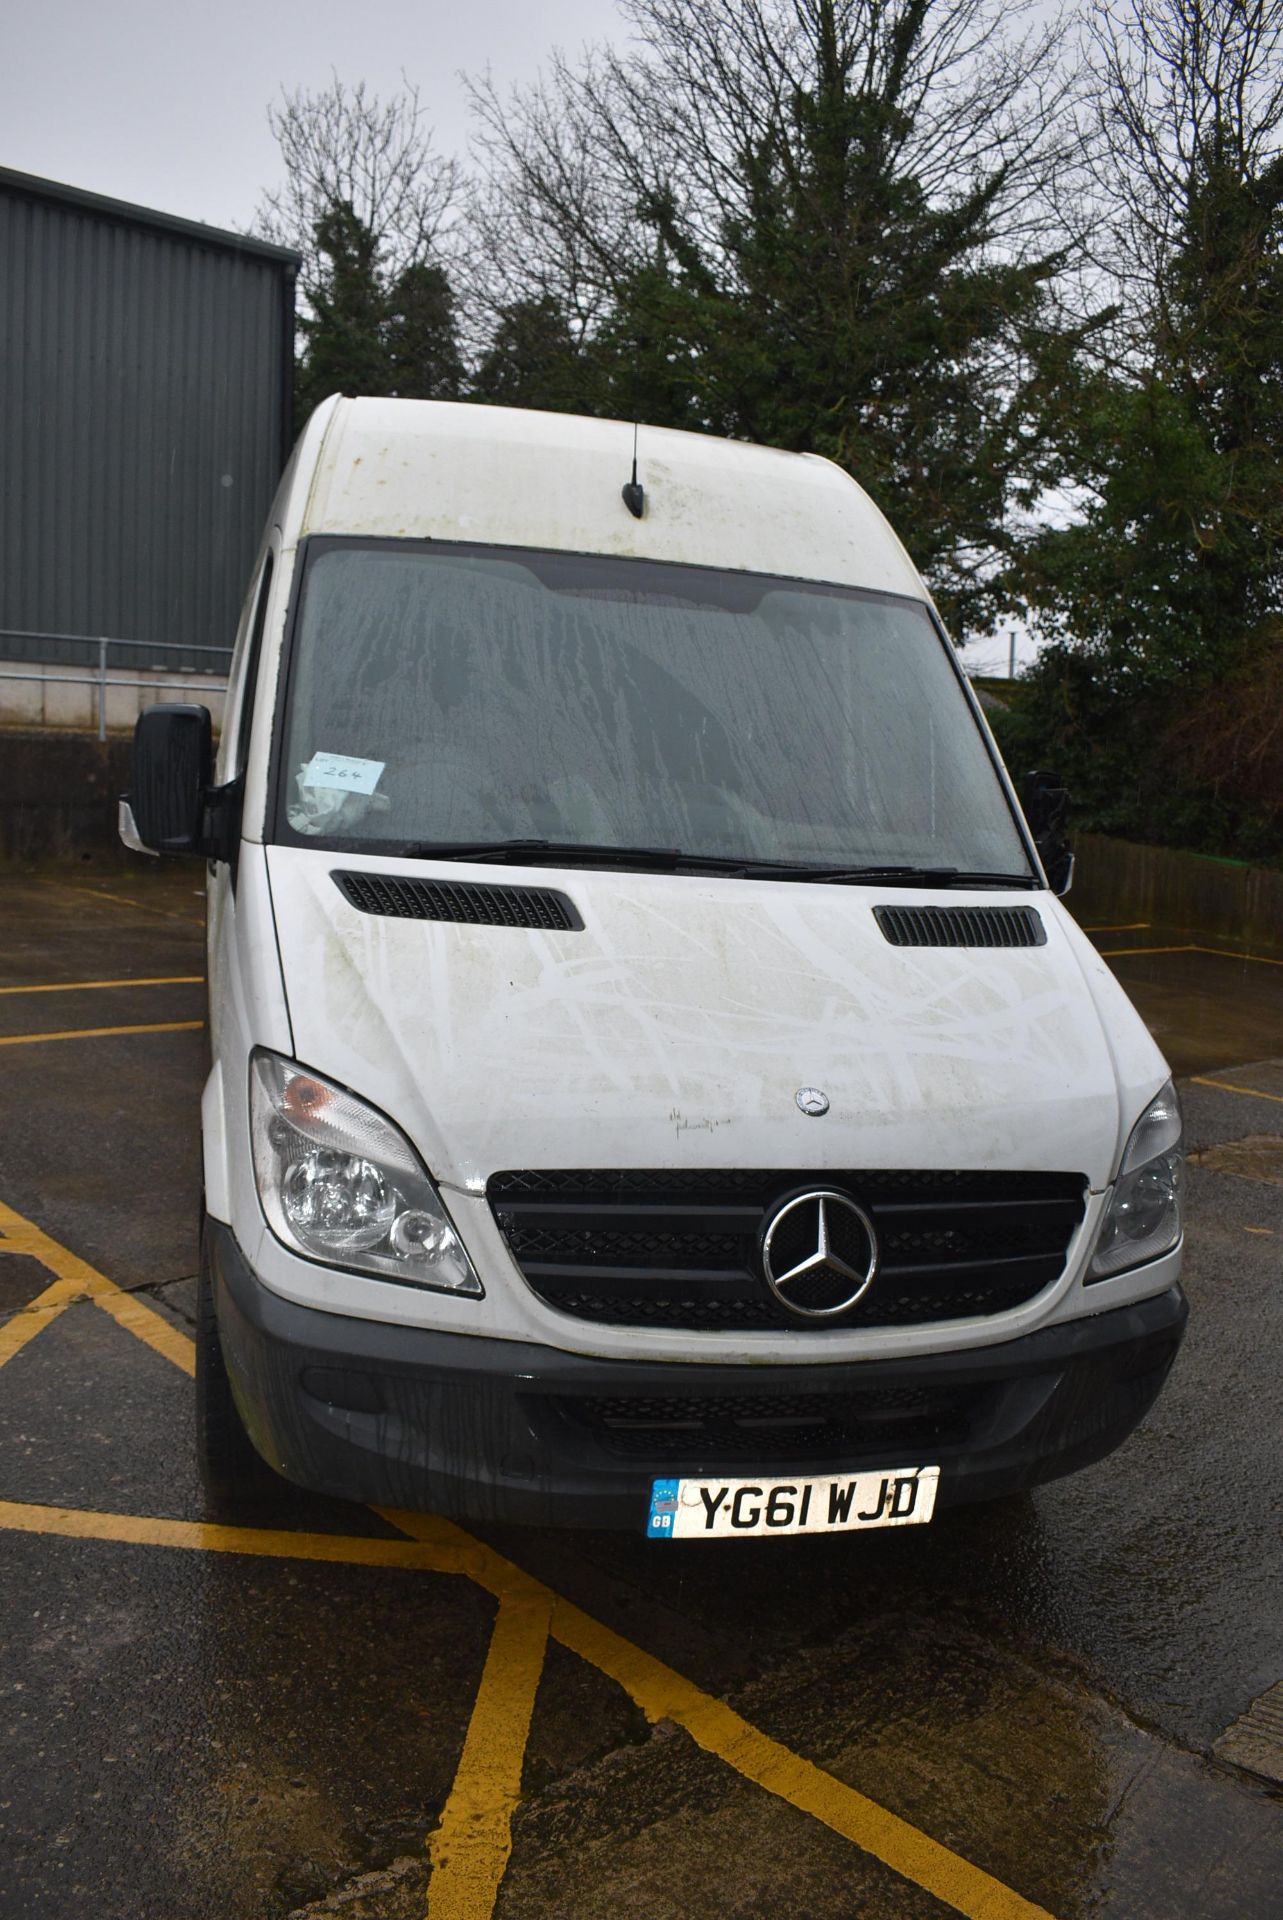 *Mercedes Sprinter 316CDi Long Wheelbase Van Reg: YG61 WJD with Side Door, Mileage: 147766, Manual